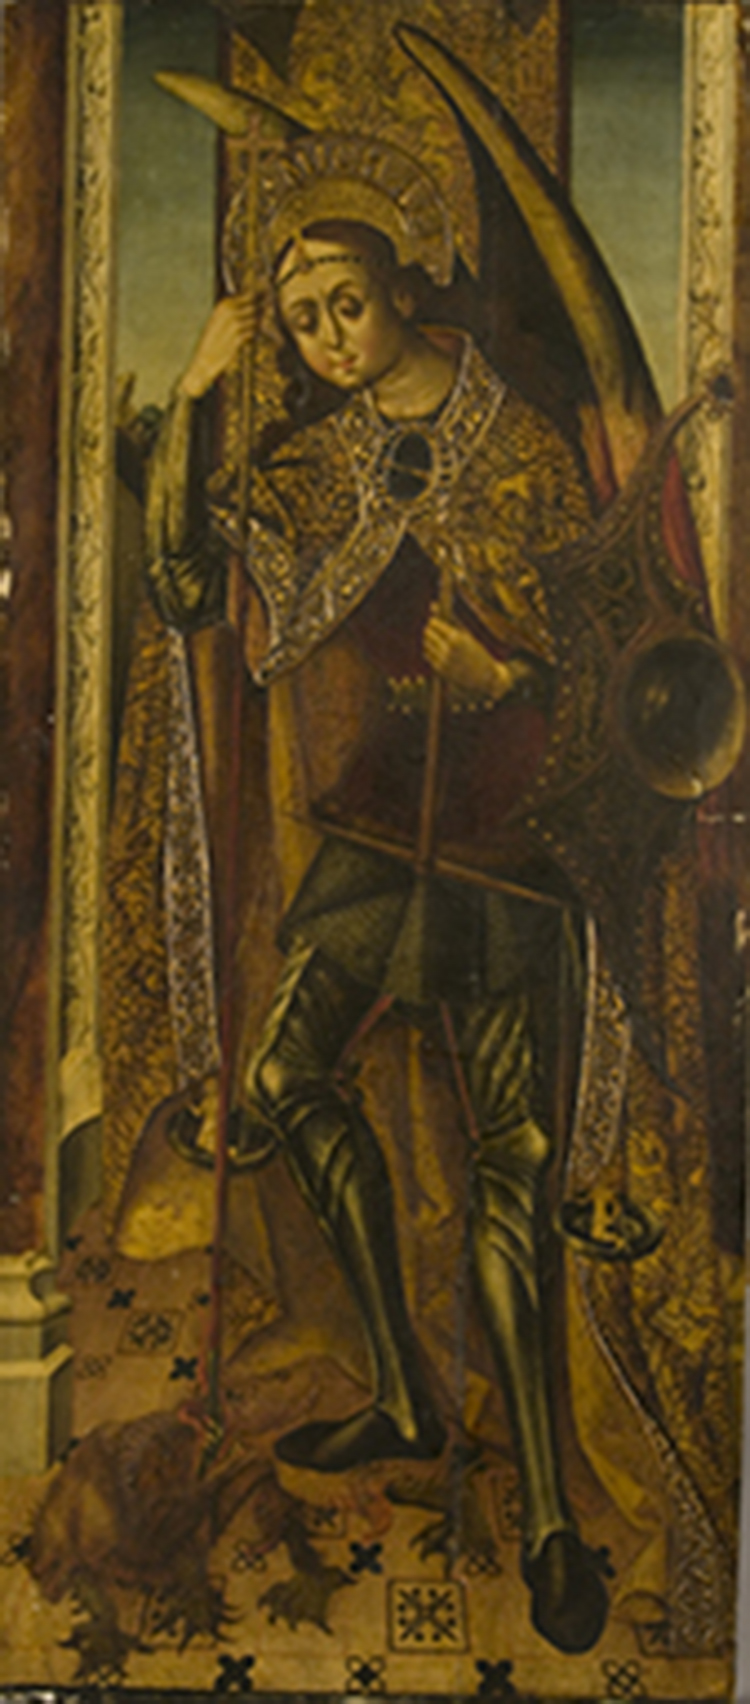 Unknown Artist, Saint Michael, ca. 1500. Tempera on wood panel